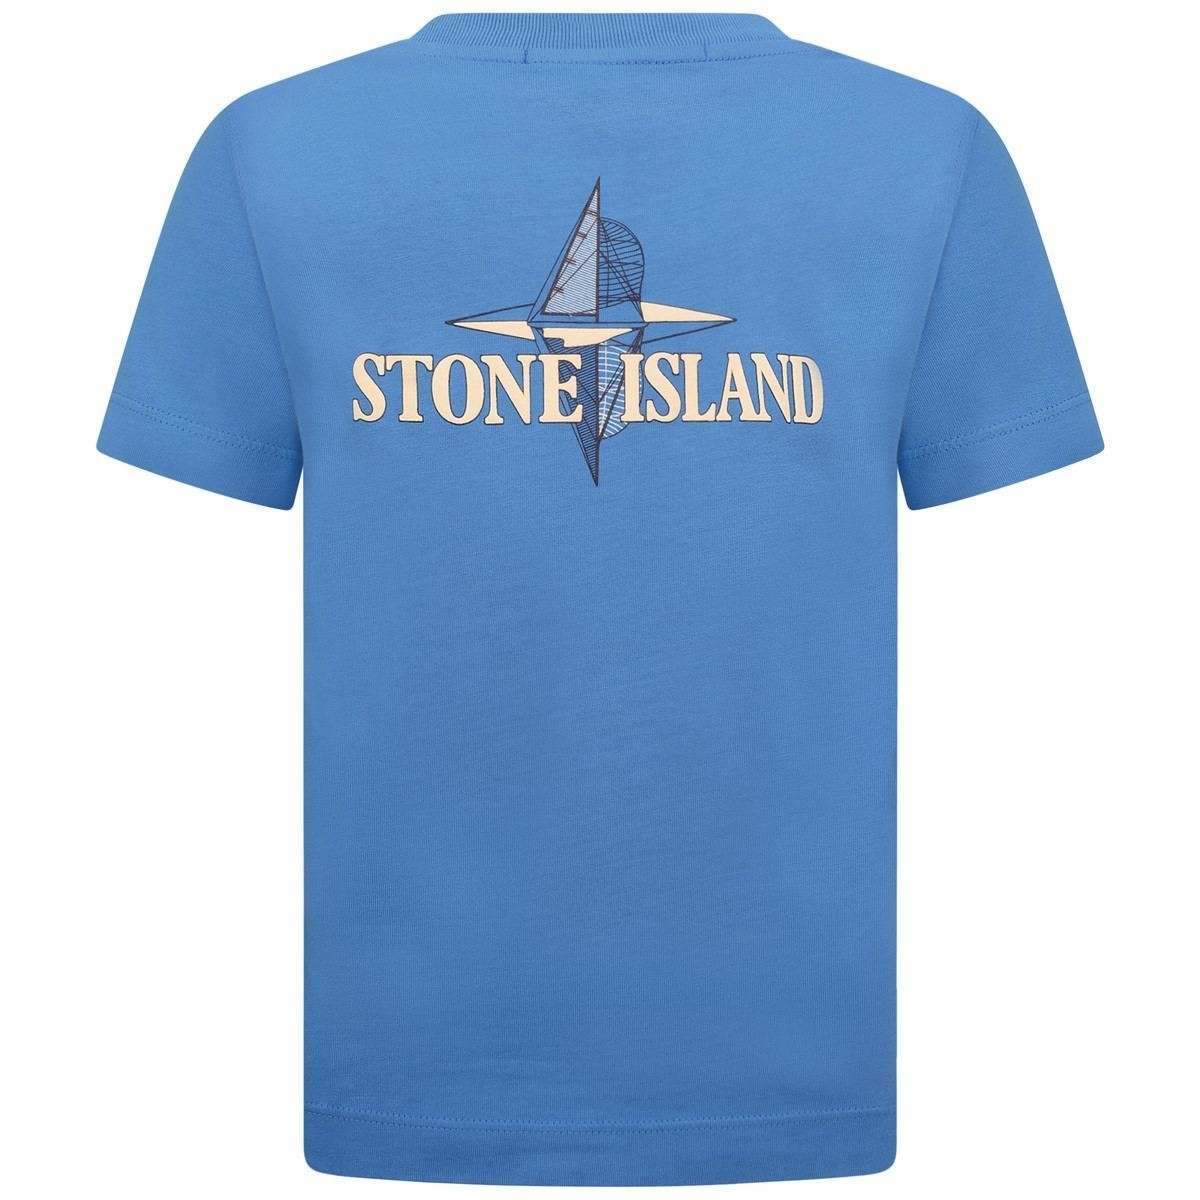 Green Boat Logo - Stone Island Blue Sailing Boat Logo Top